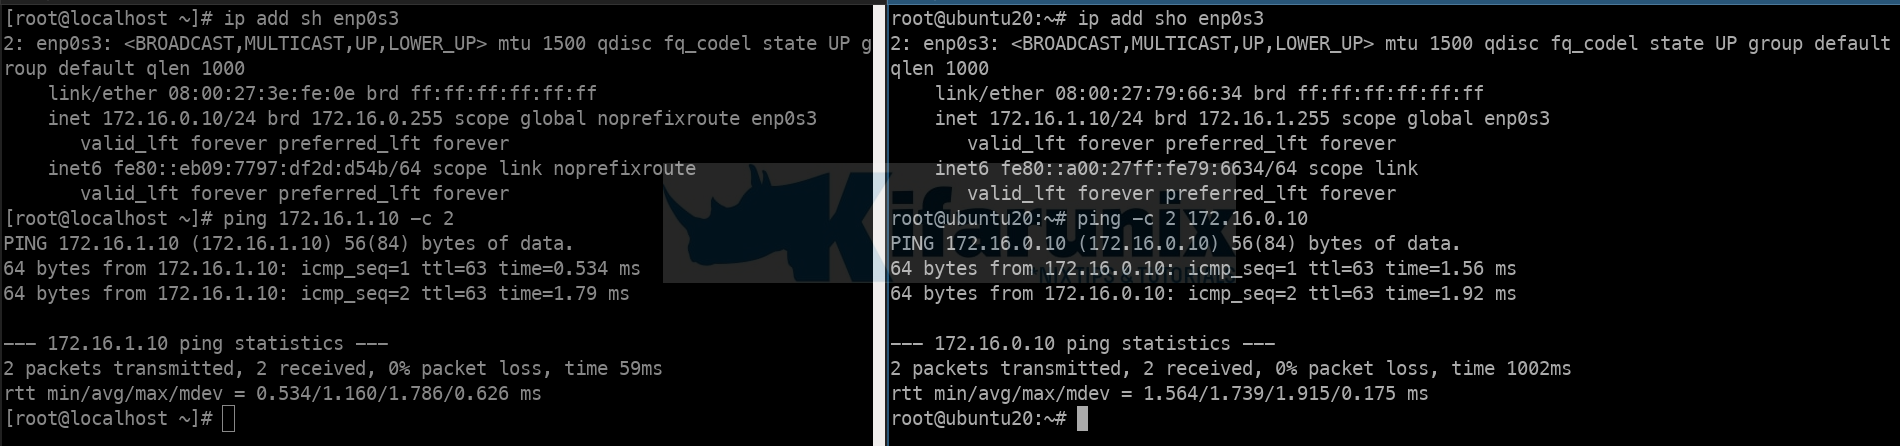 Configure Ubuntu 20.04 as Linux Router